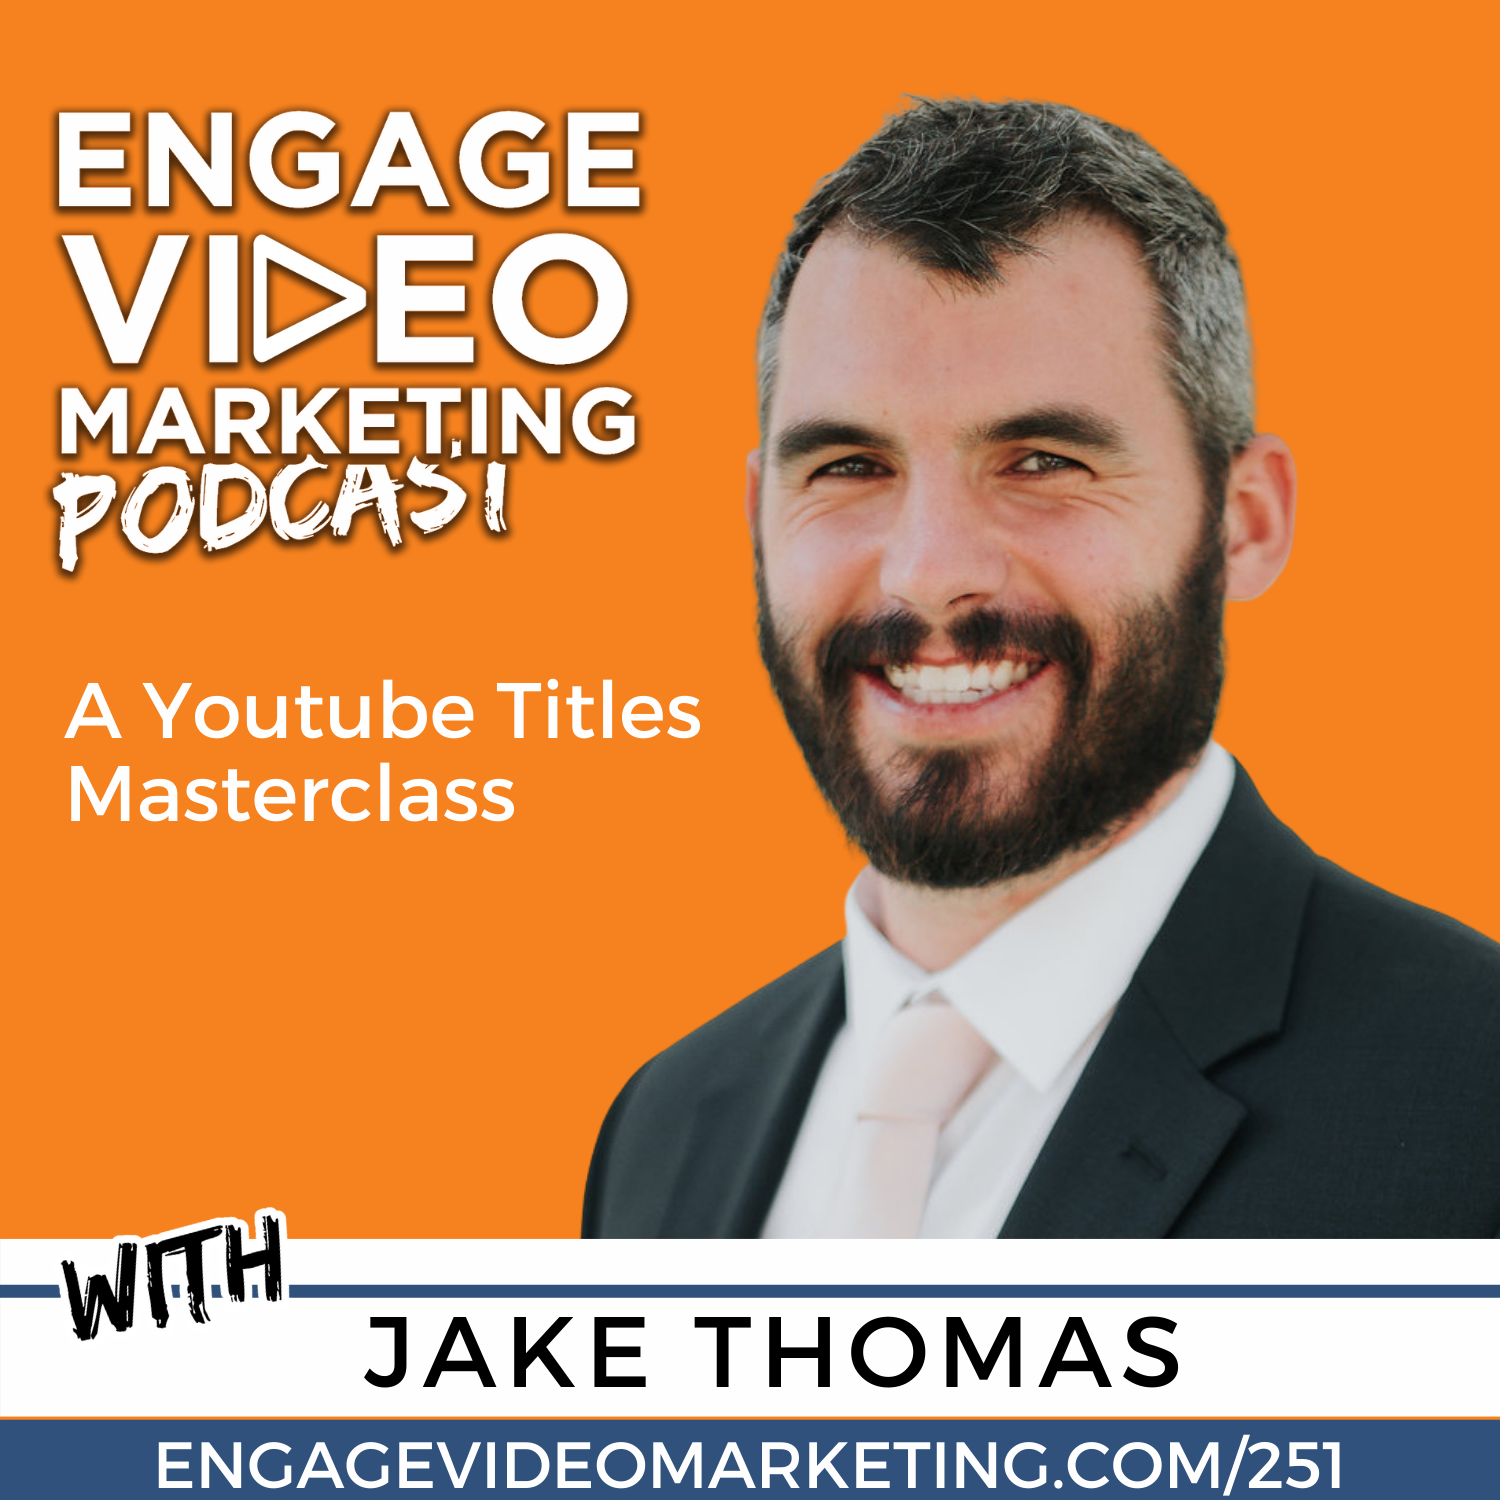 A YouTube Titles Masterclass with Jake Thomas